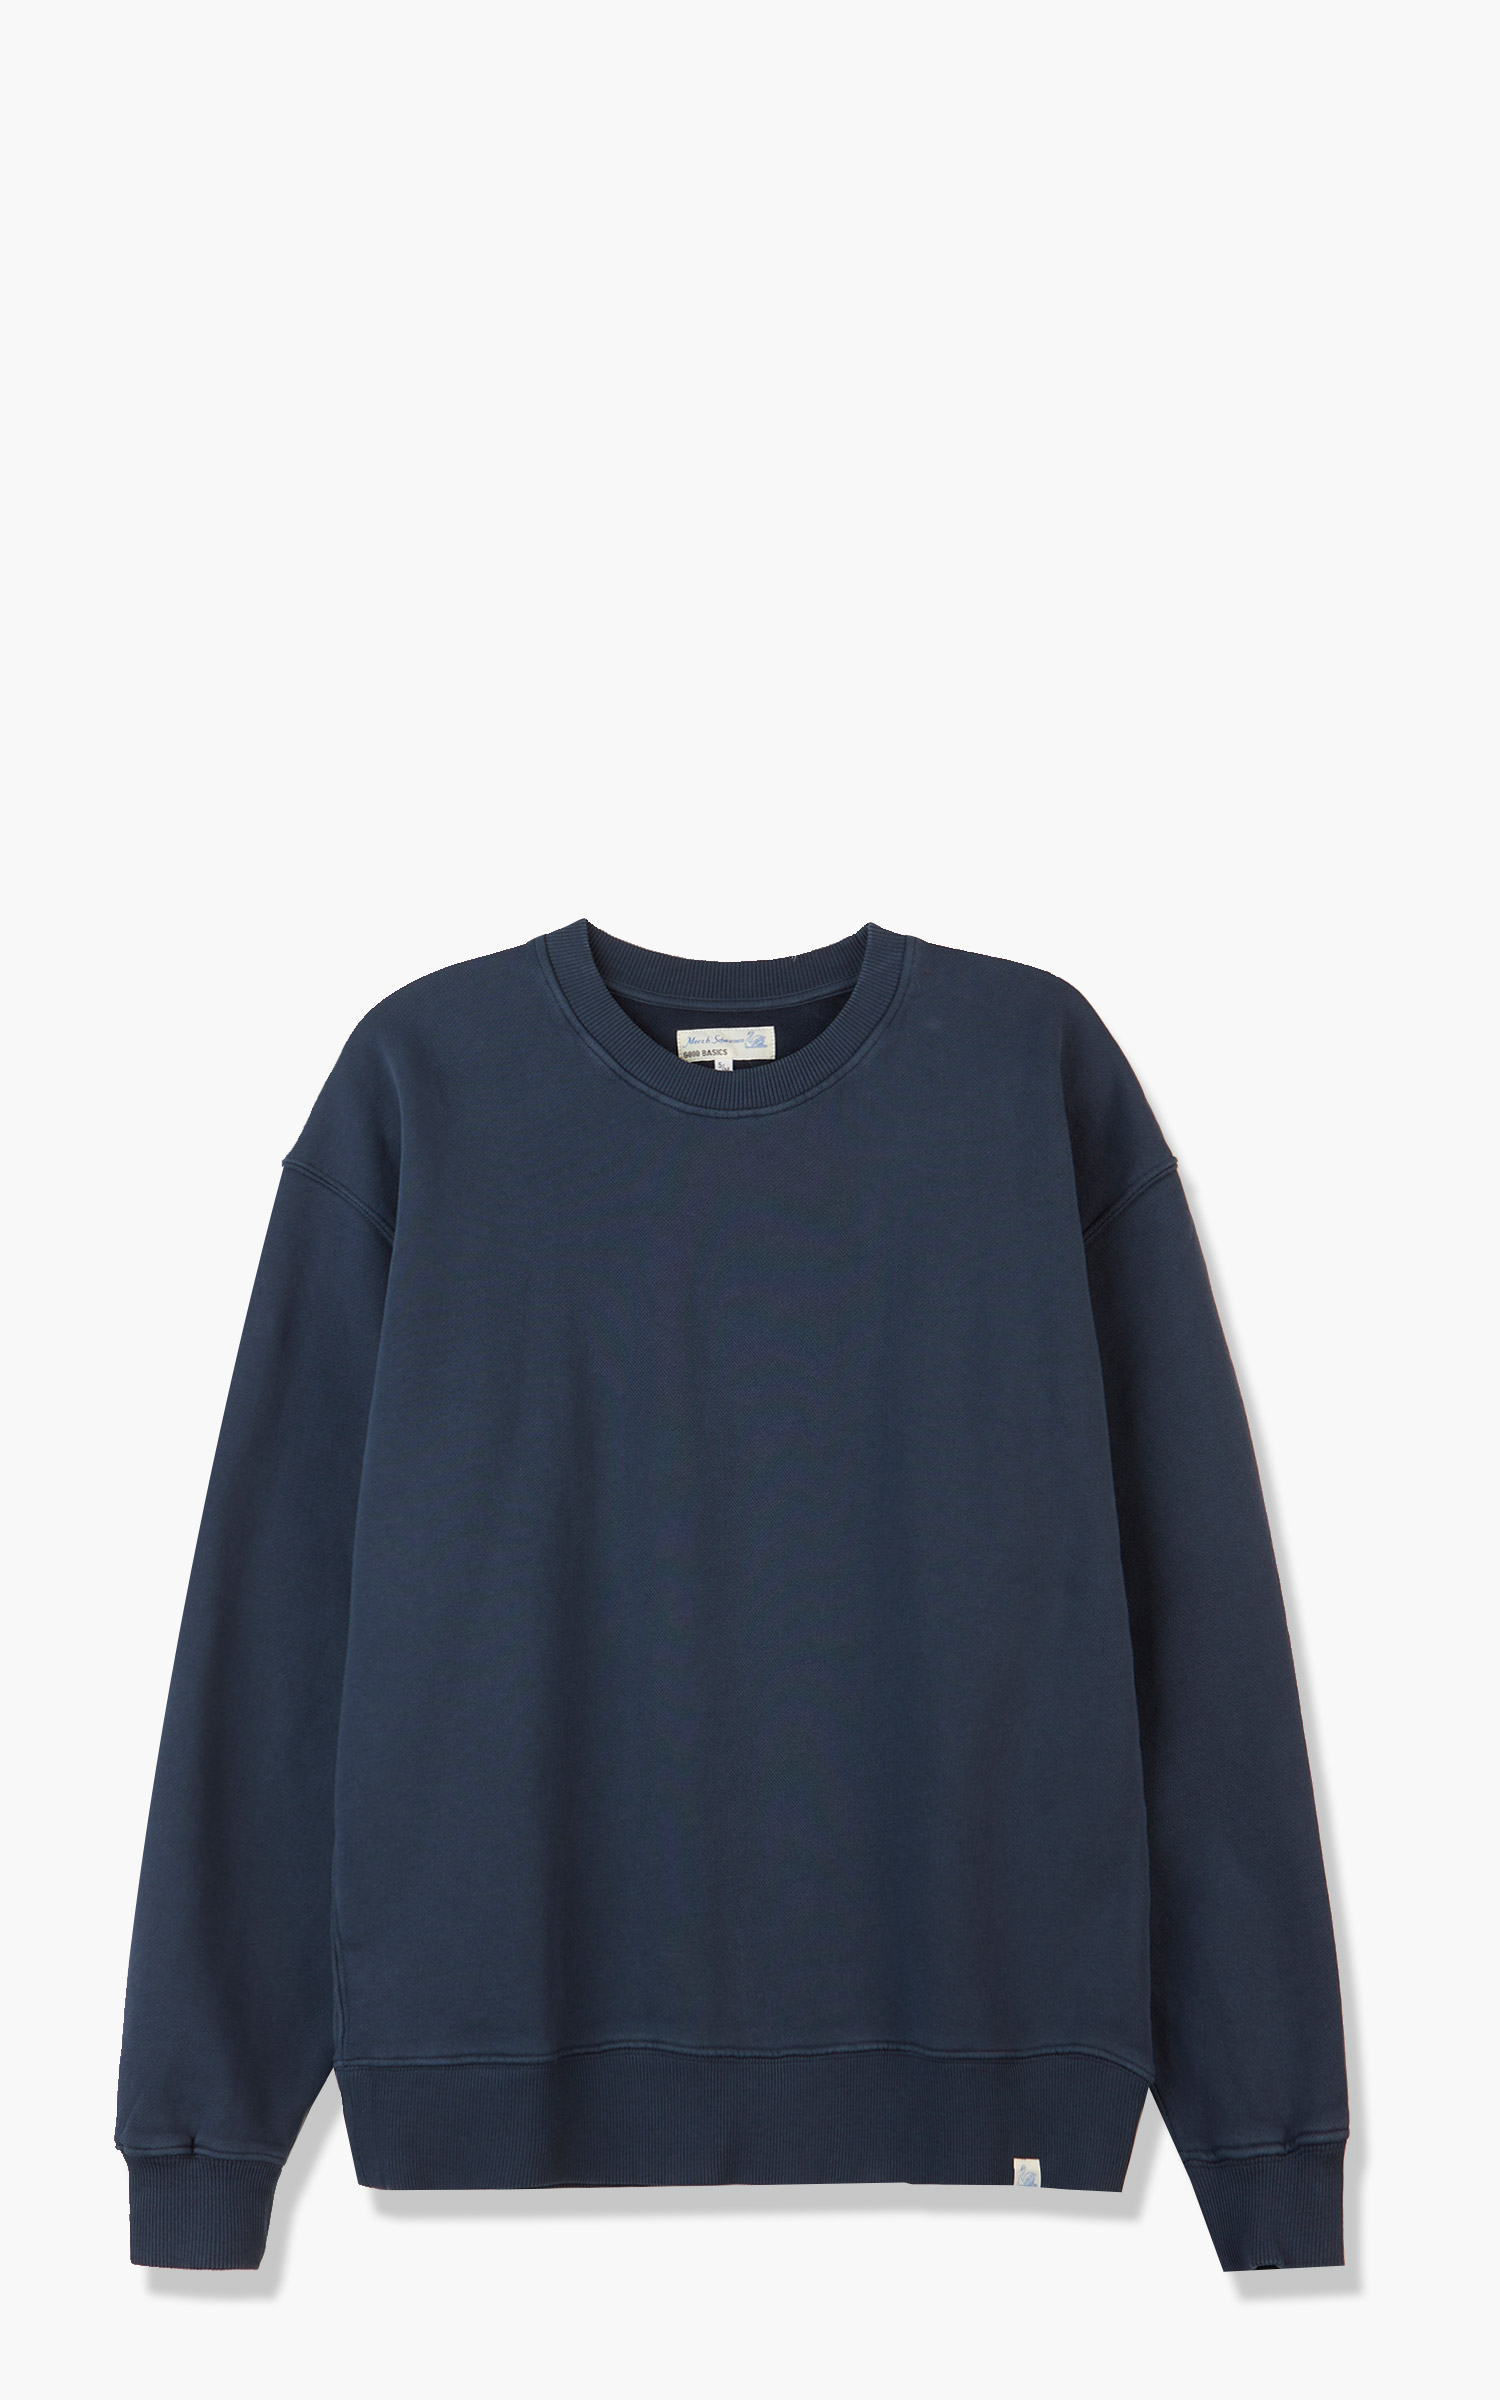 Merz b. Schwanen CSWOS02 Oversized Sweatshirt Denim Blue | Cultizm